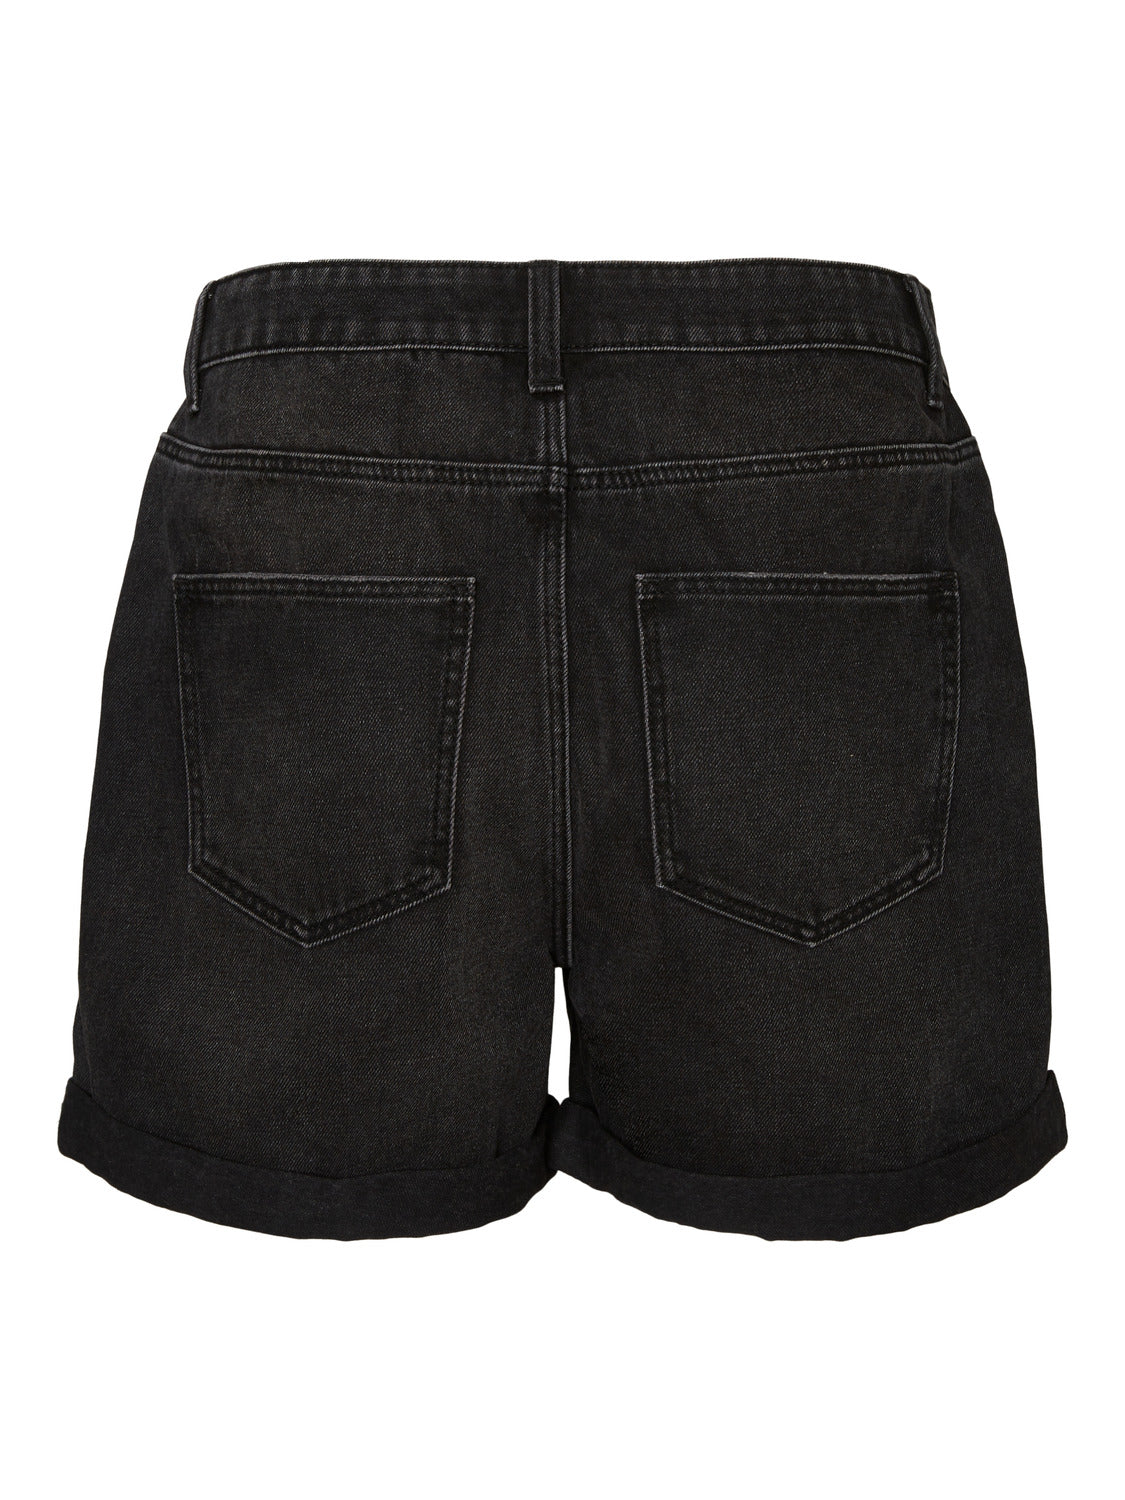 NMSMILEY Shorts - black denim